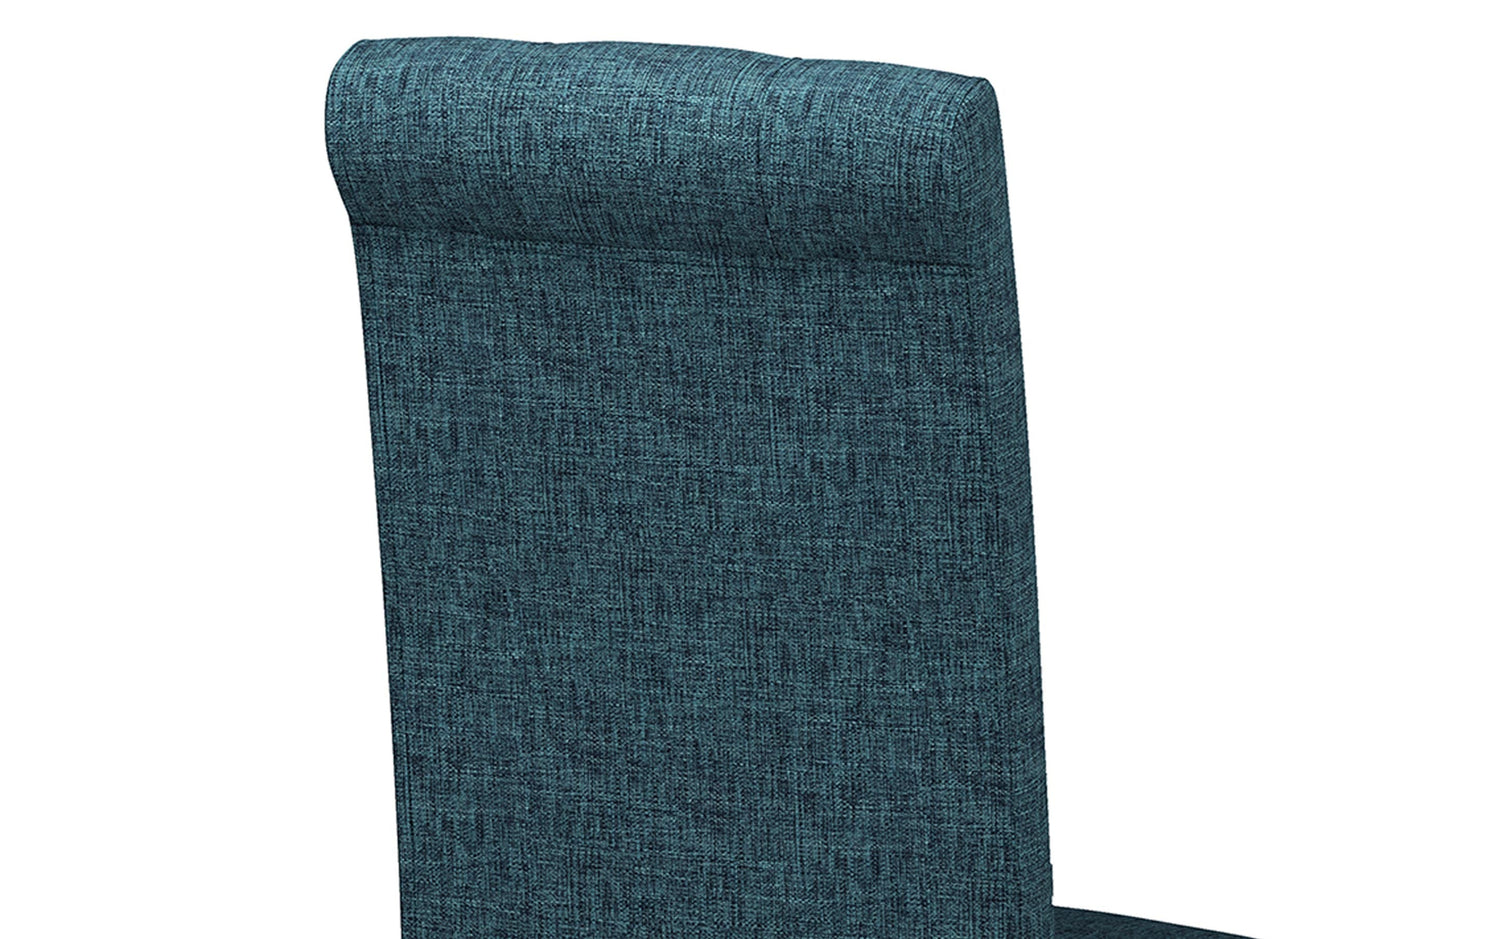 Denim Blue Linen Style Fabric | Cosmopolitan 5 Piece Dining Set